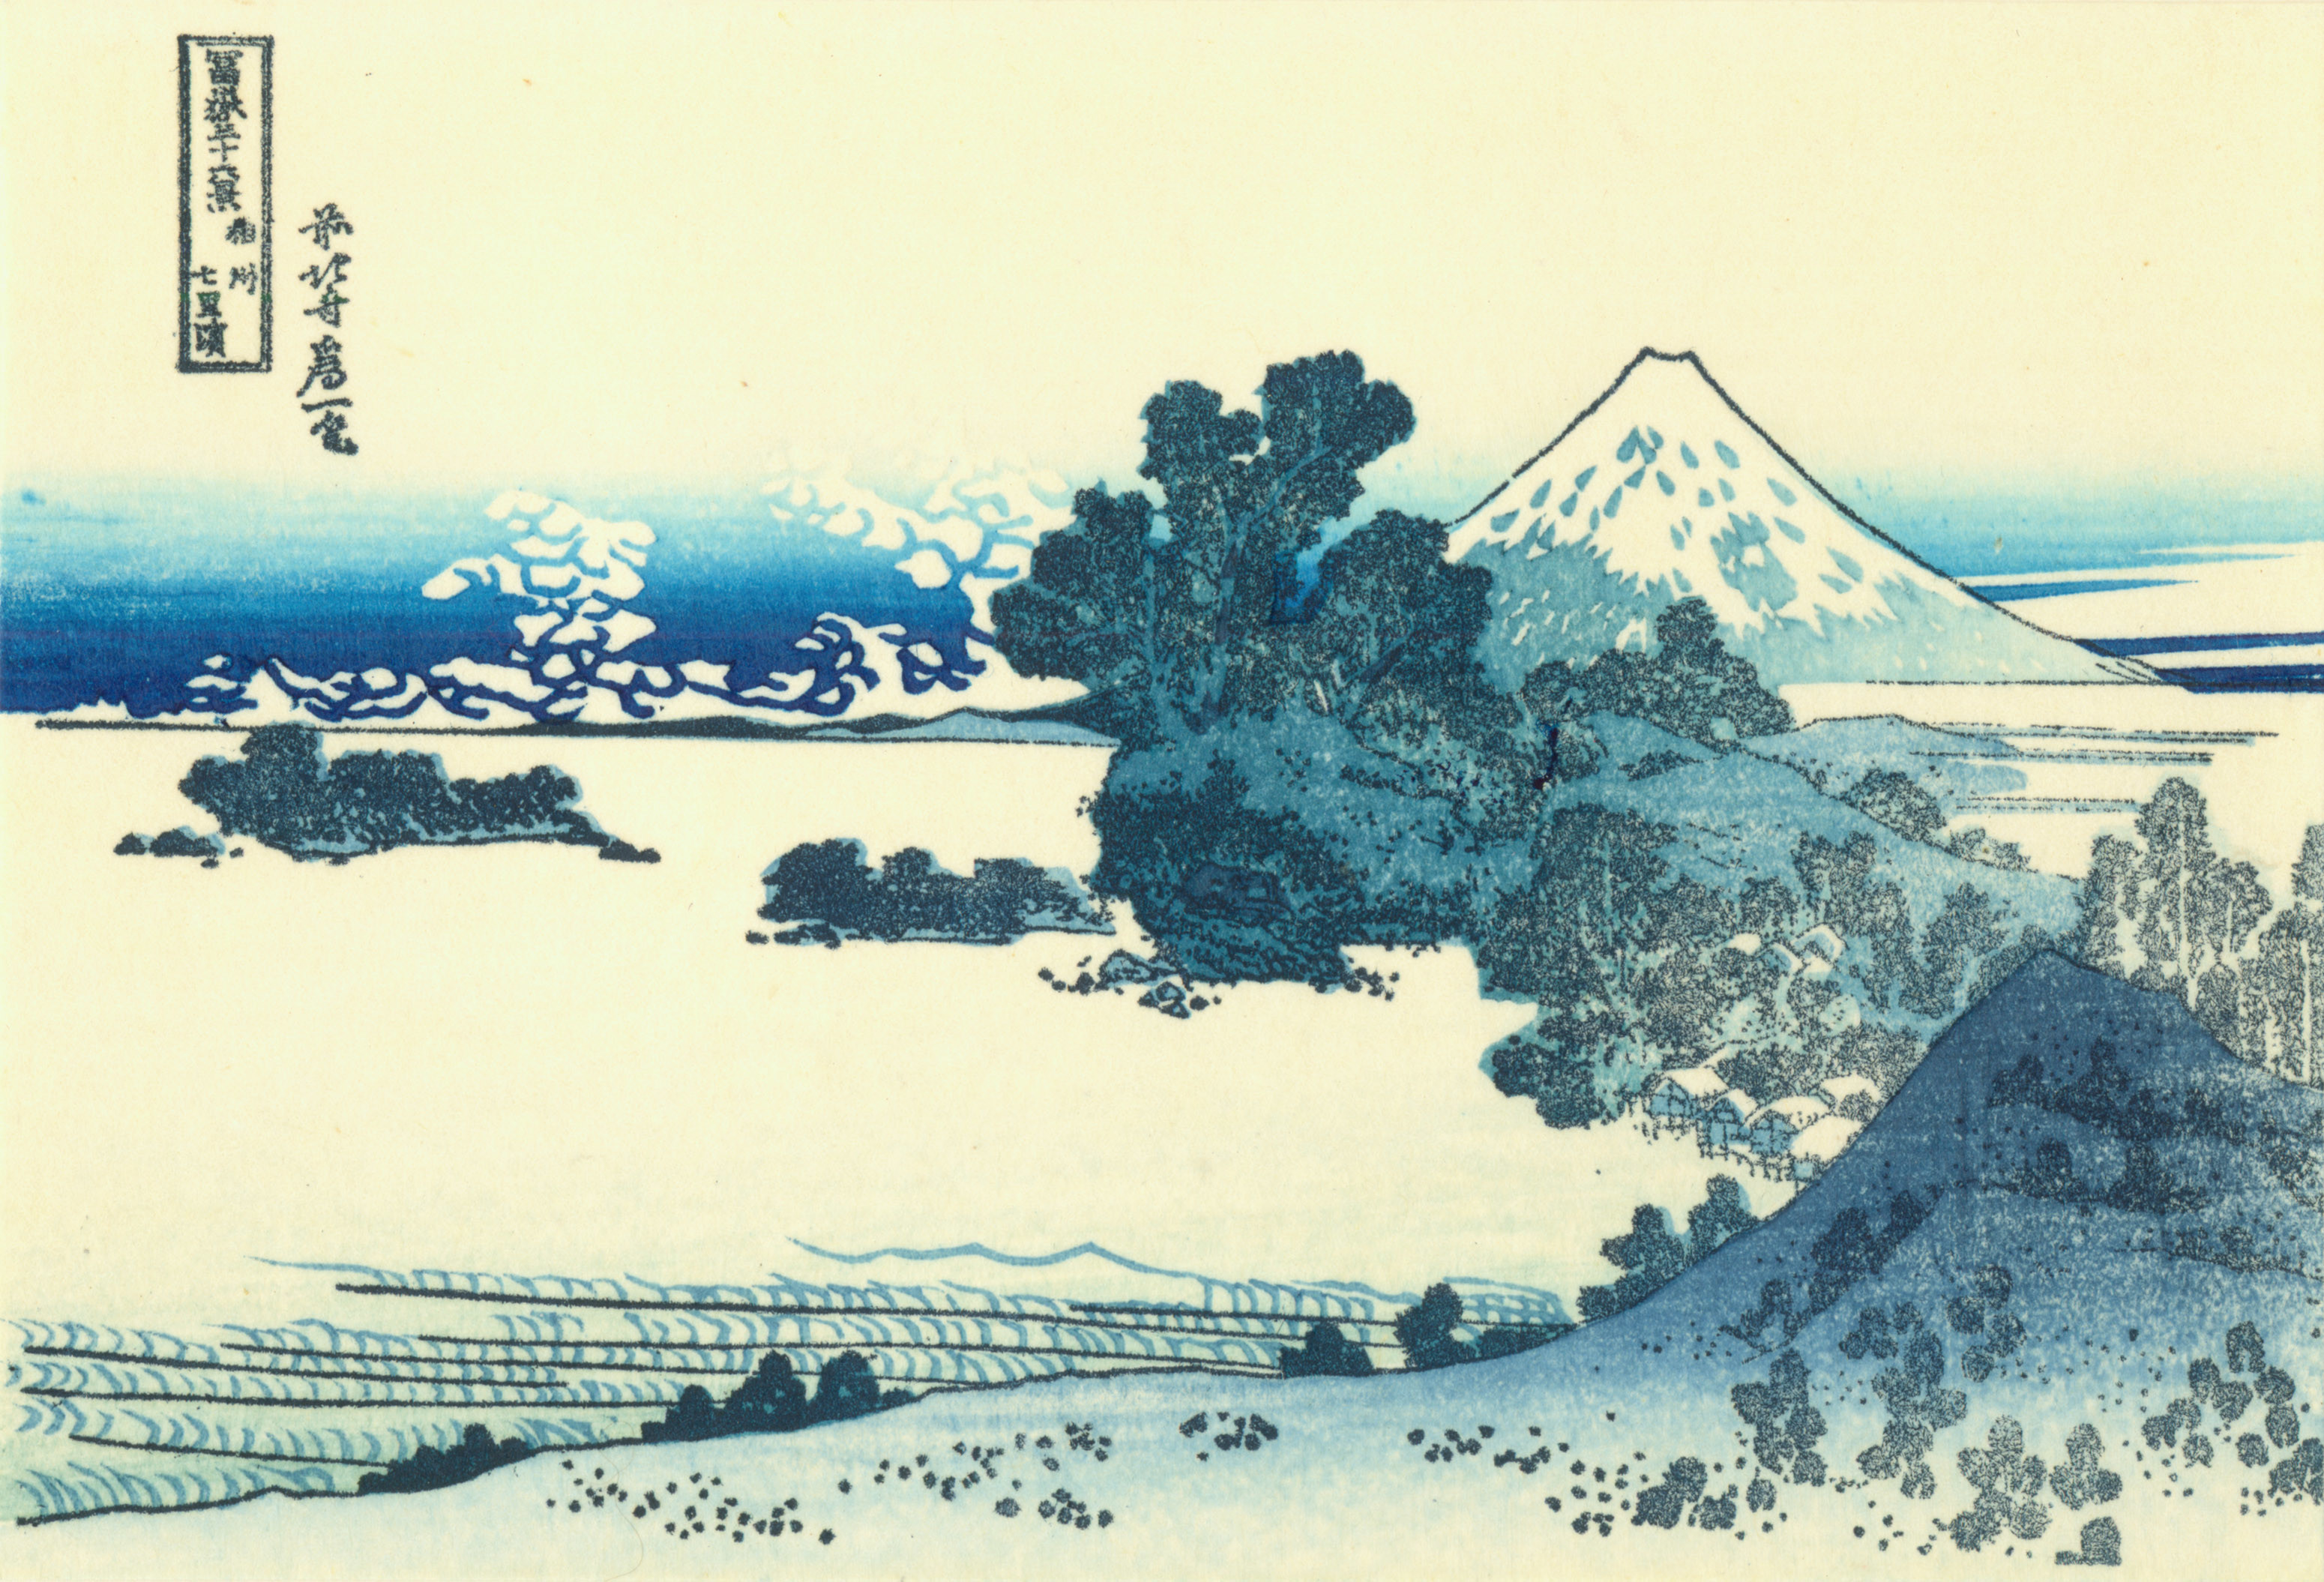 3100x2110 Coloring Page Amusing The Great Wave Painting 26 Ukiyo E Off Kanagawa By  Hokusai 2048x Jpg ..